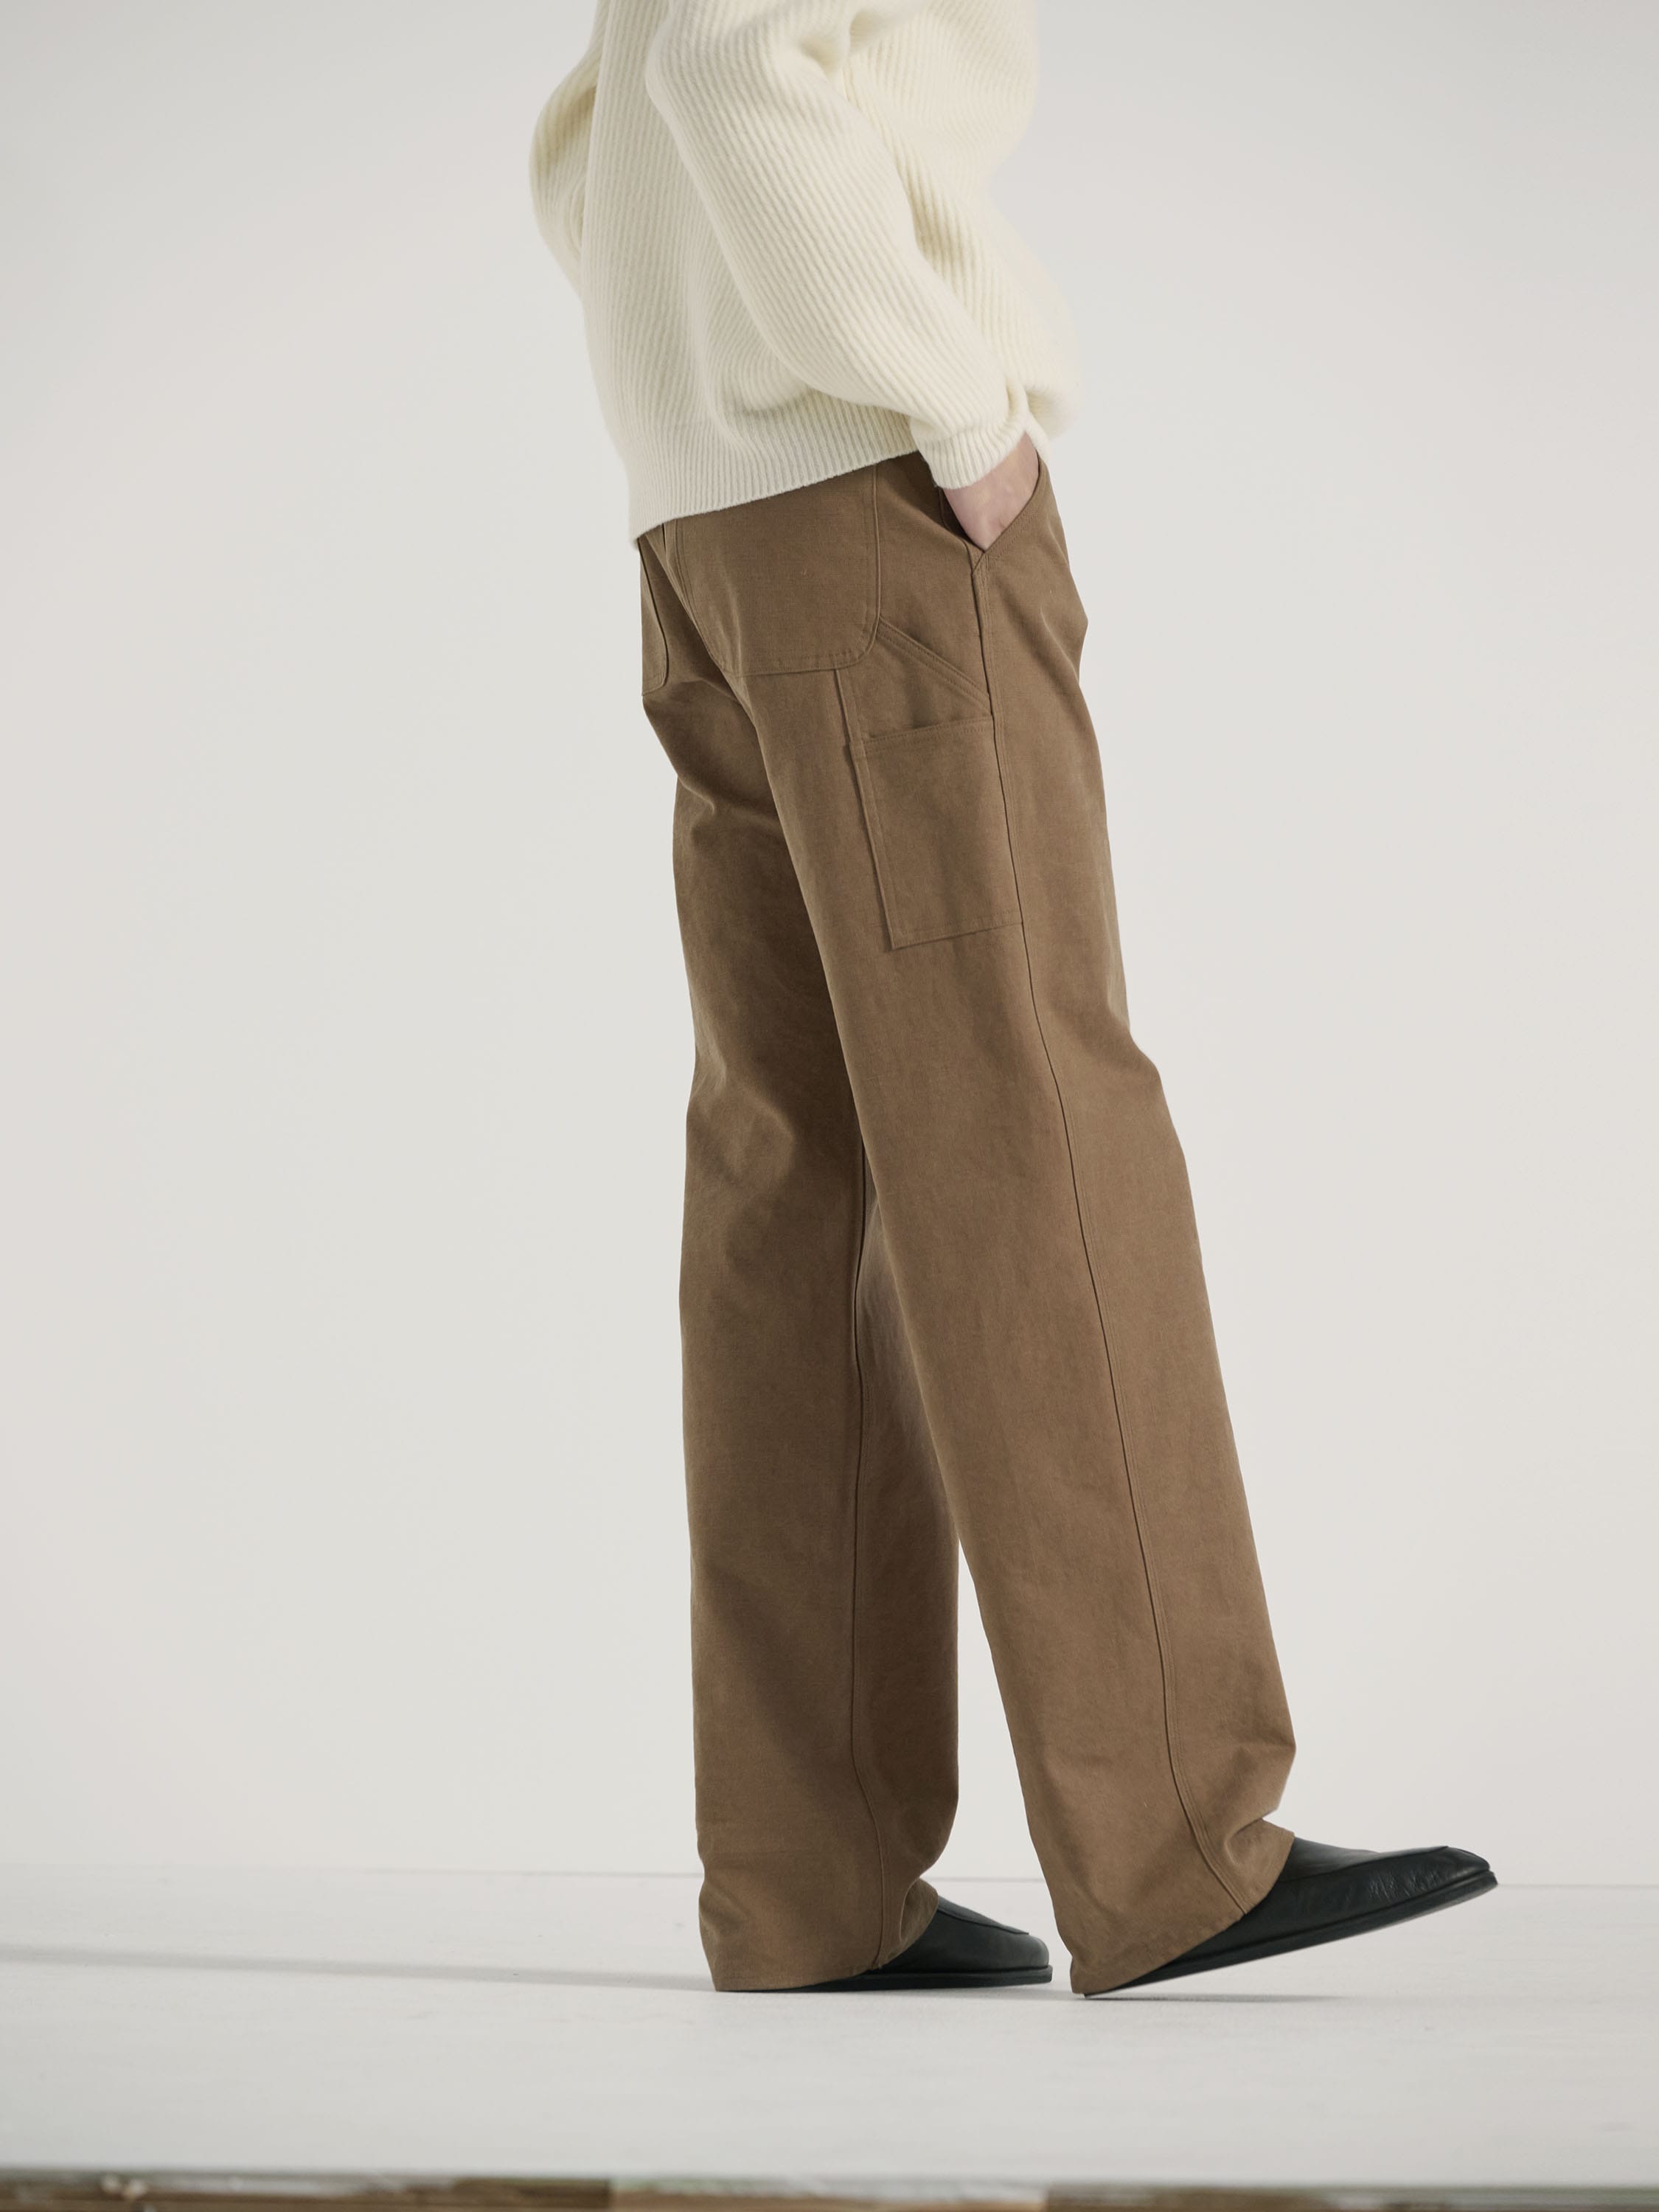 Auralee オーラリー cotton oiled canvas pants - パンツ